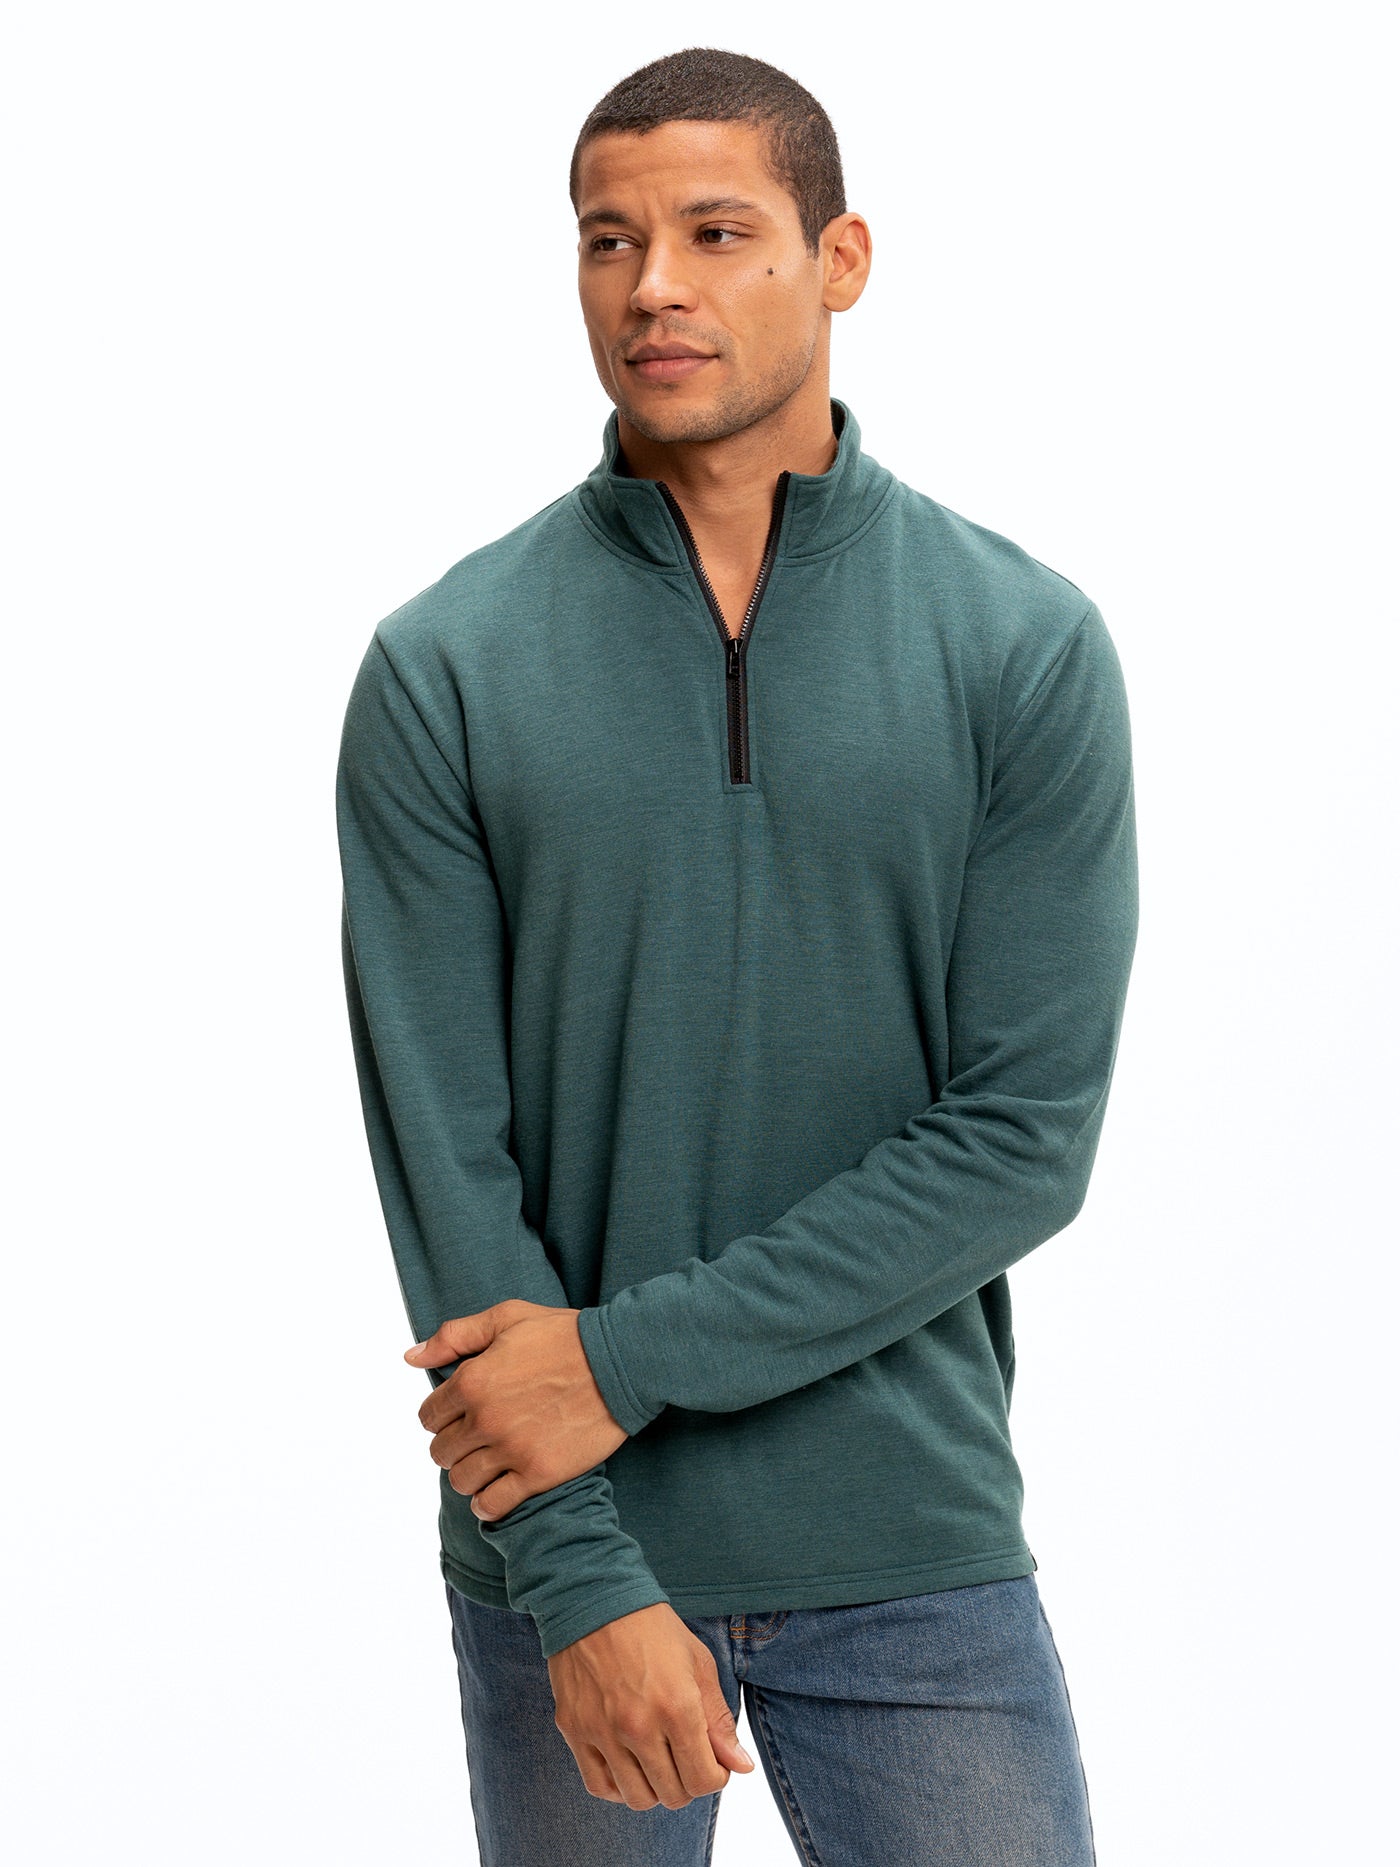 Kace Featherweight Lounge Mock Neck Mens Outerwear Sweatshirt Threads 4 Thought 